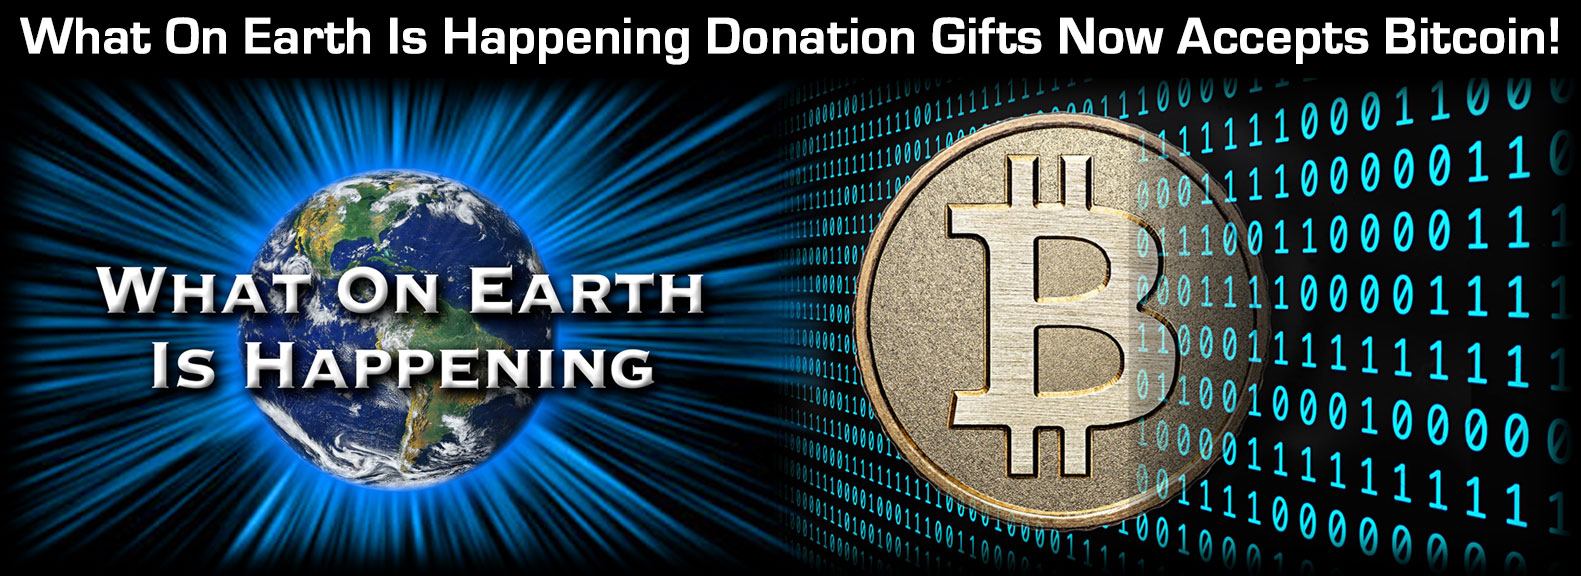 donation gifts bitcoin